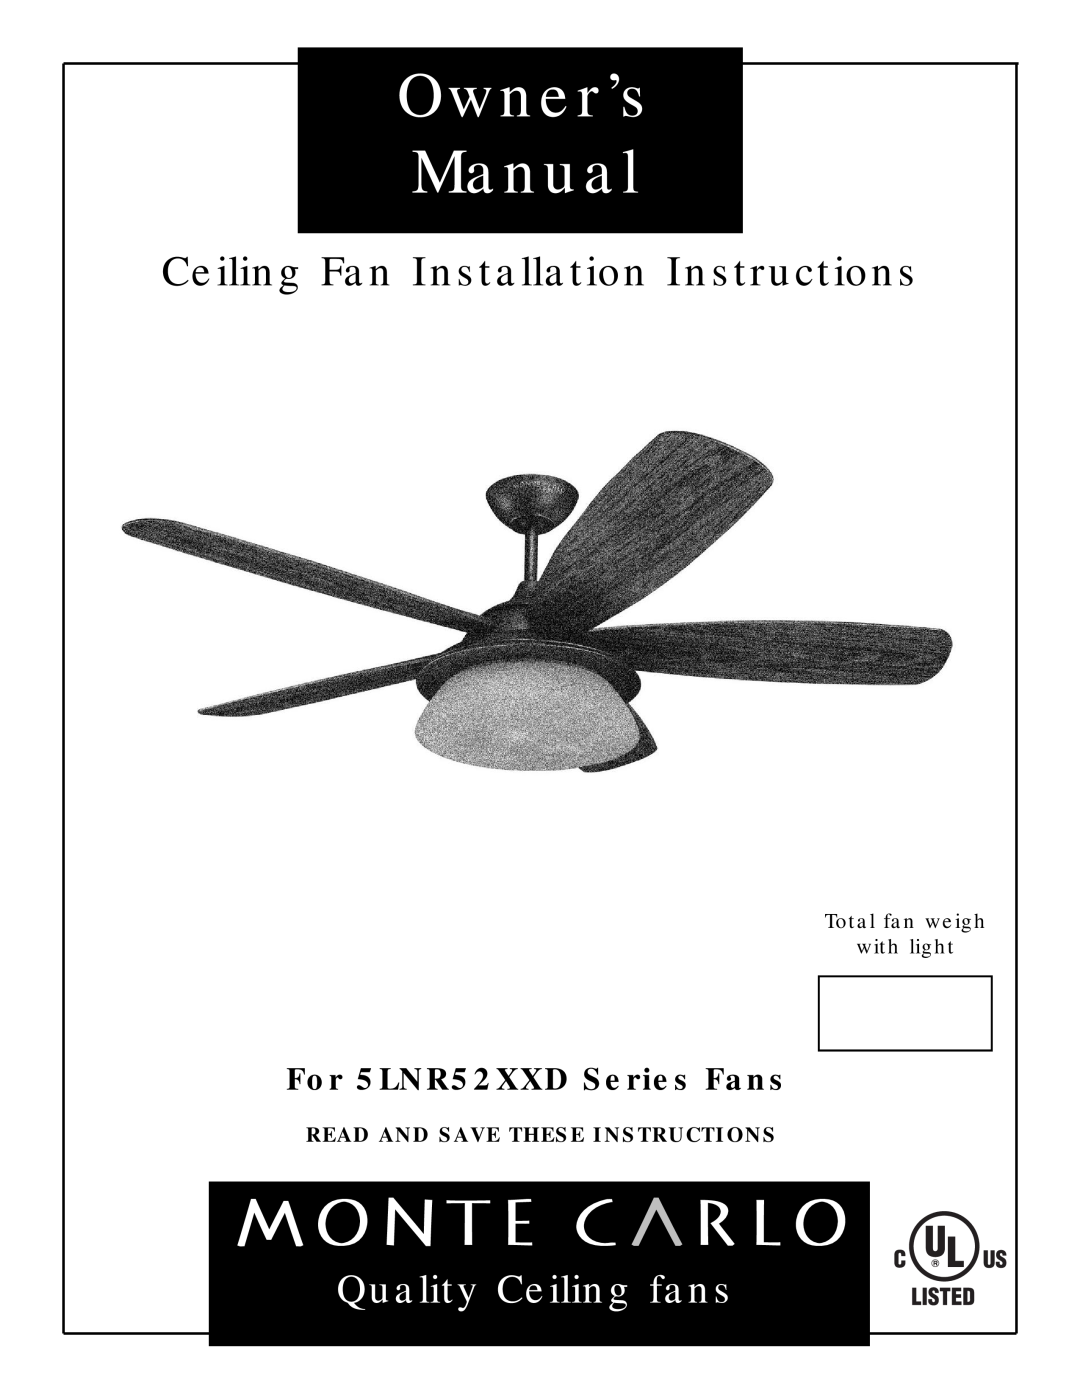 Monte Carlo Fan Company owner manual For 5LNR52XXD Series Fans, Ceiling Fan Installation Instructions 